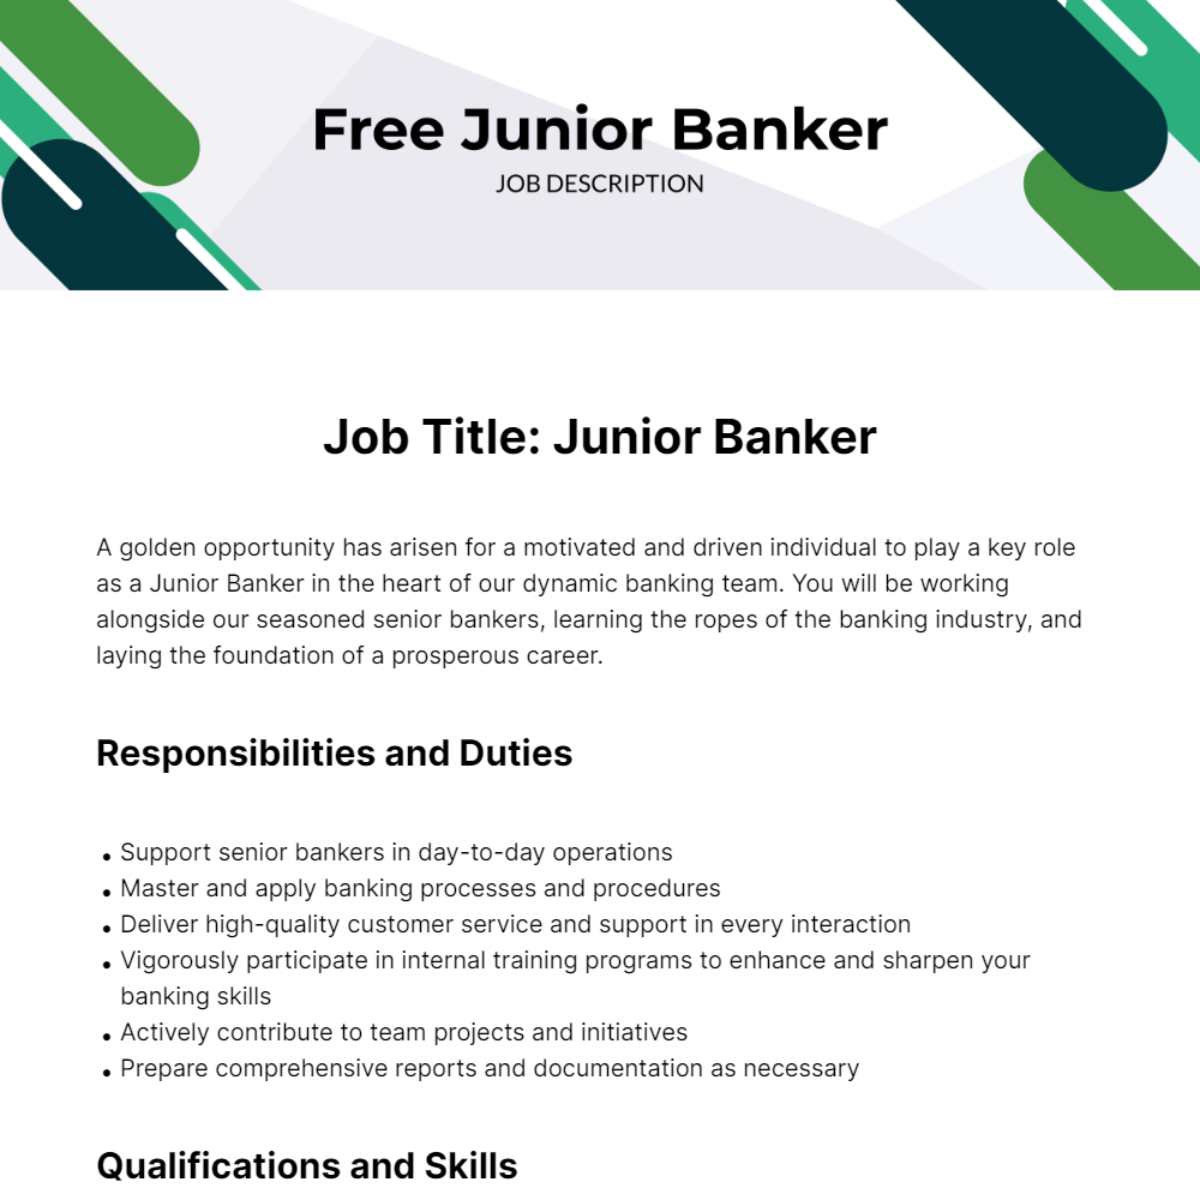 Free Junior Banker Job Description Template